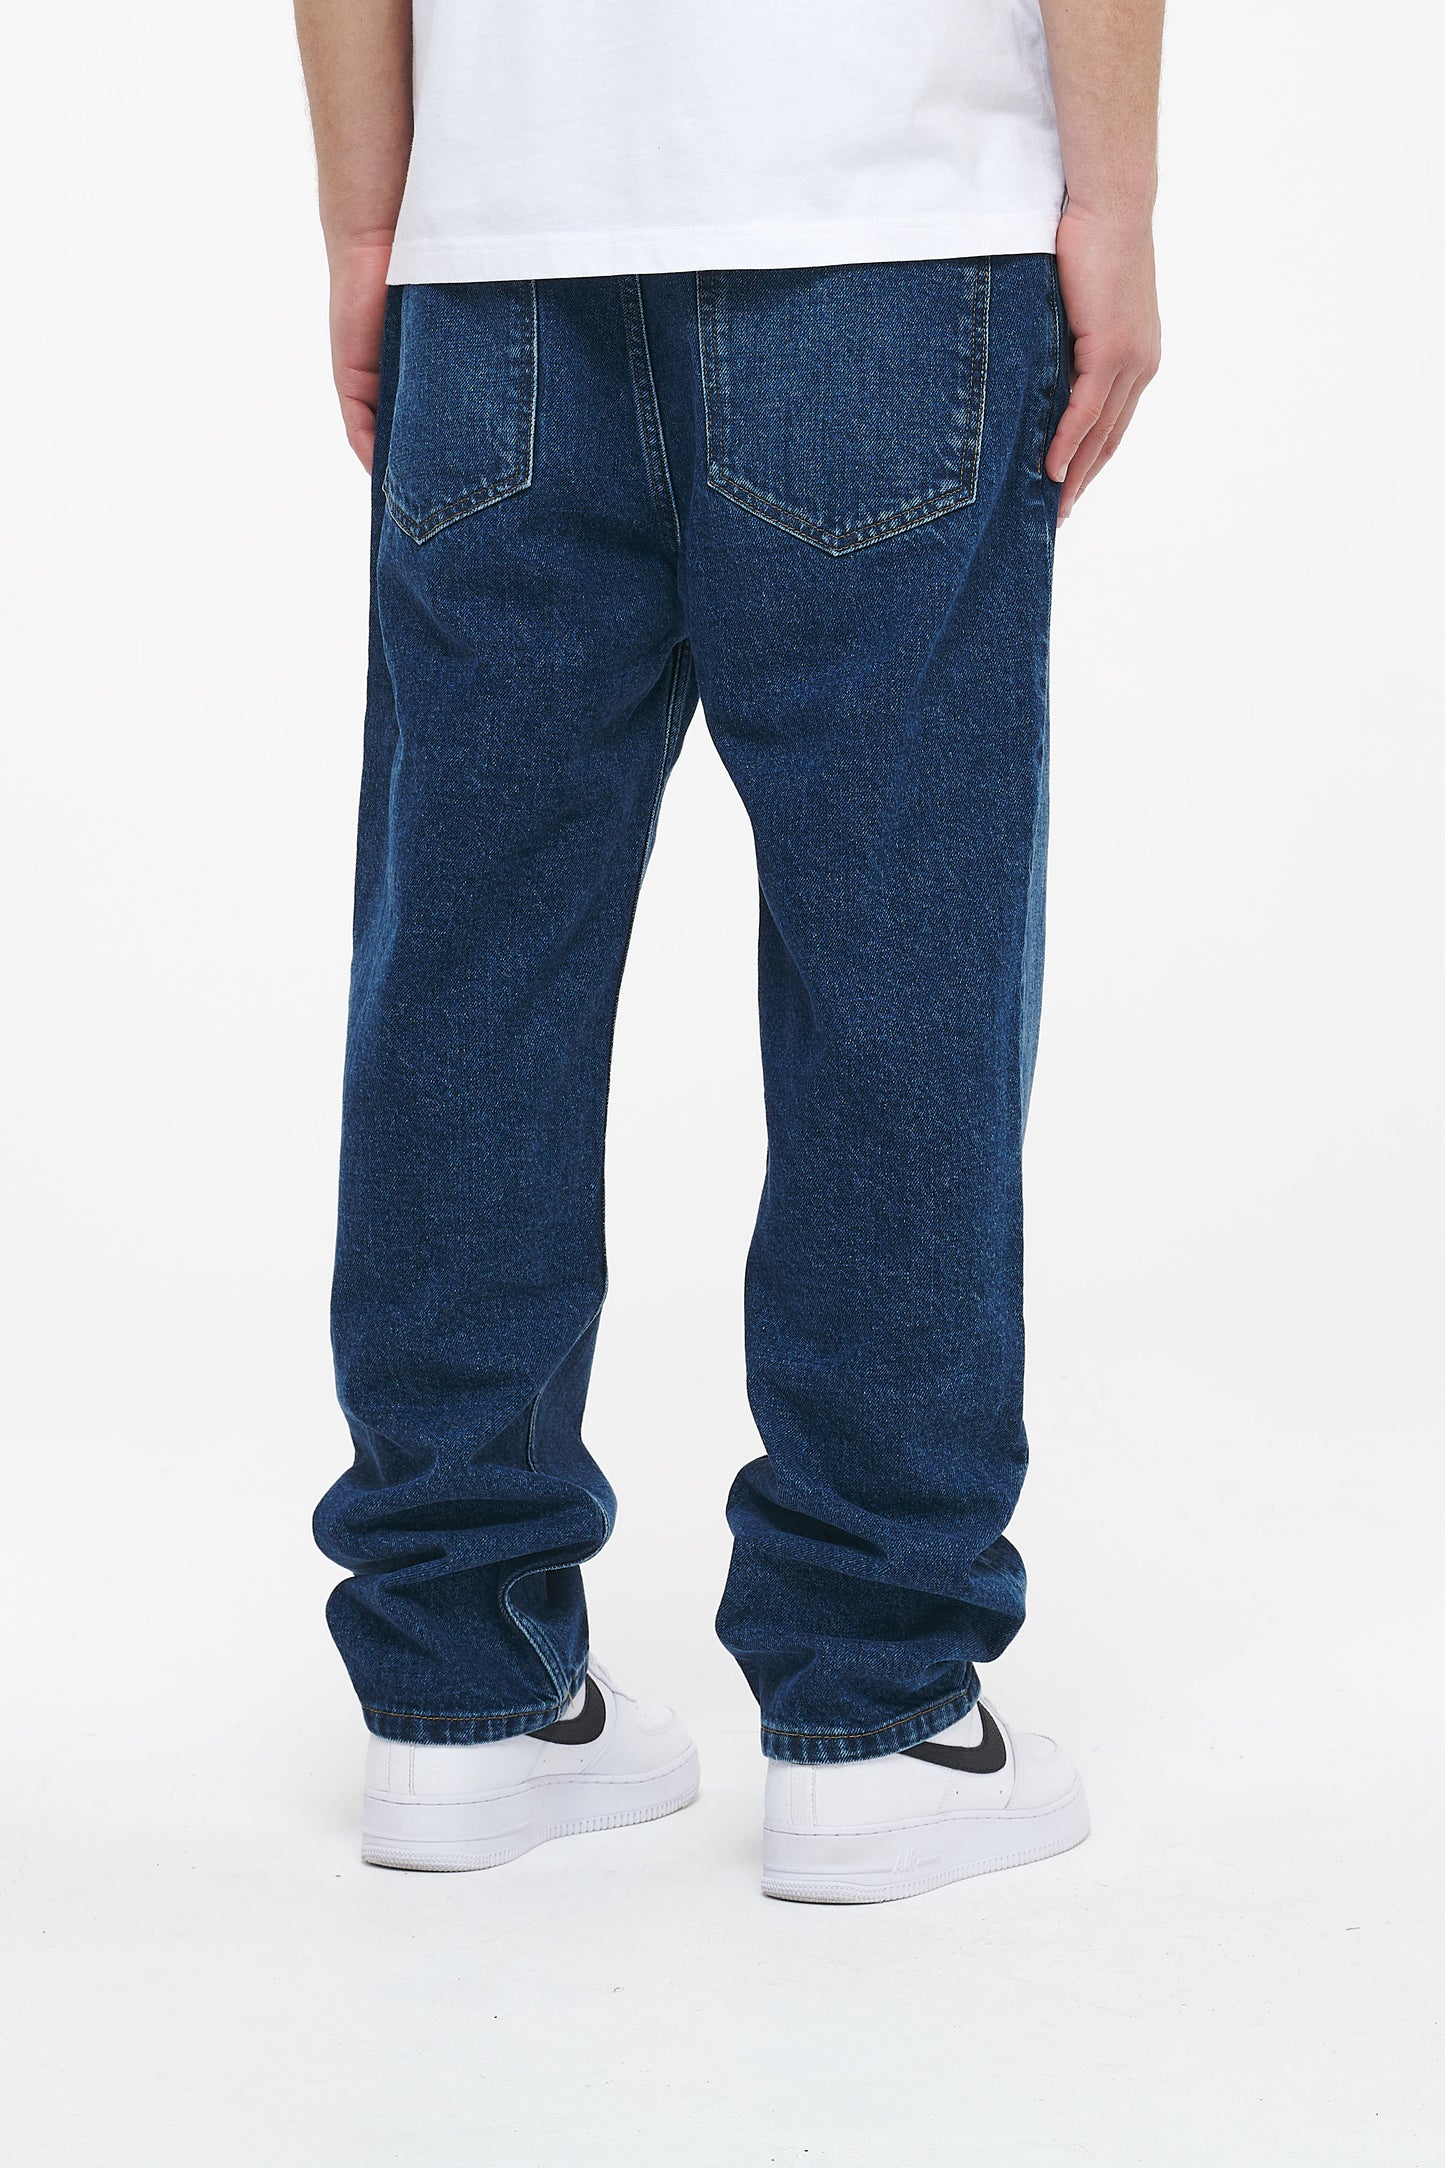 Basic Baggy Jeans 2YBGY0003 Dark Blue